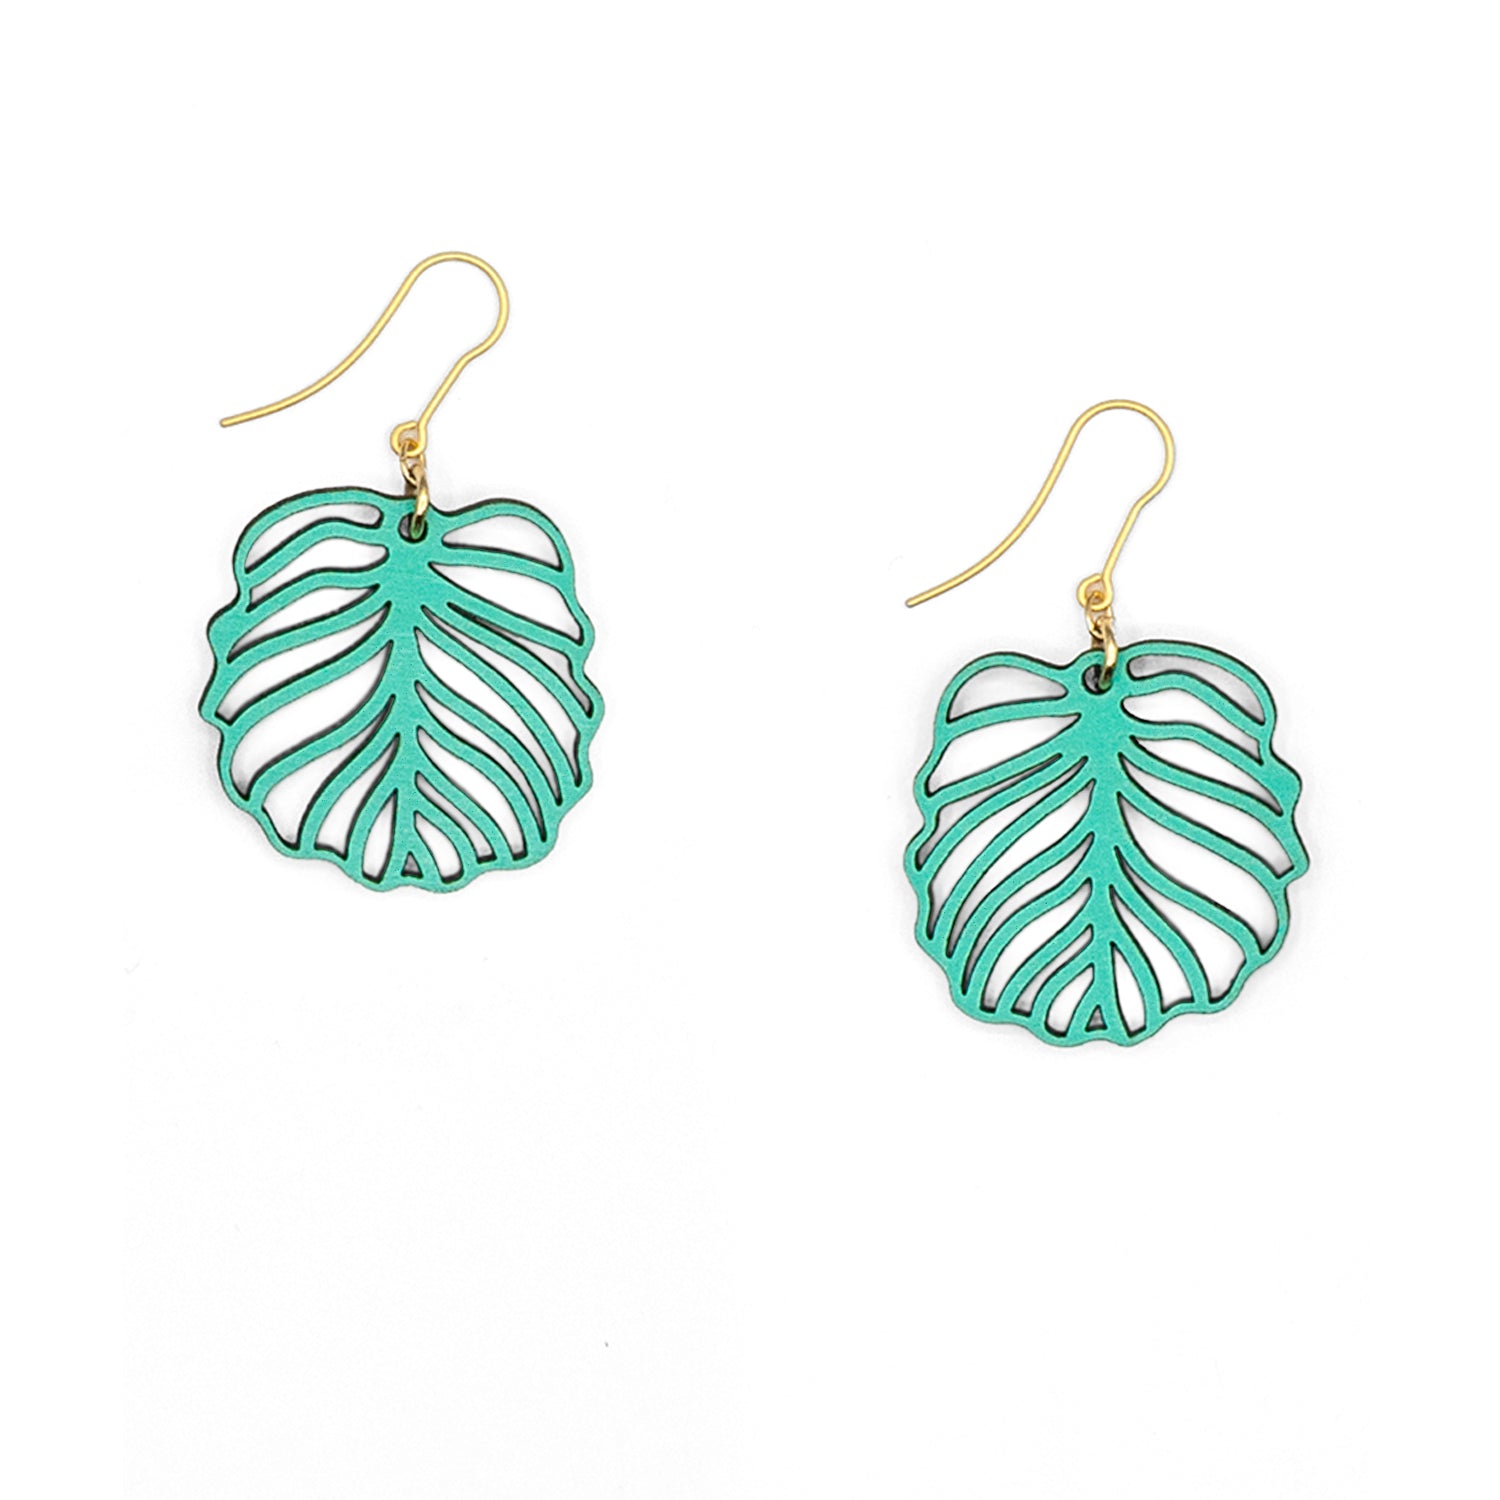 Striped Leaf Day Hoop Earrings - The Nancy Smillie Shop - Art, Jewellery & Designer Gifts Glasgow